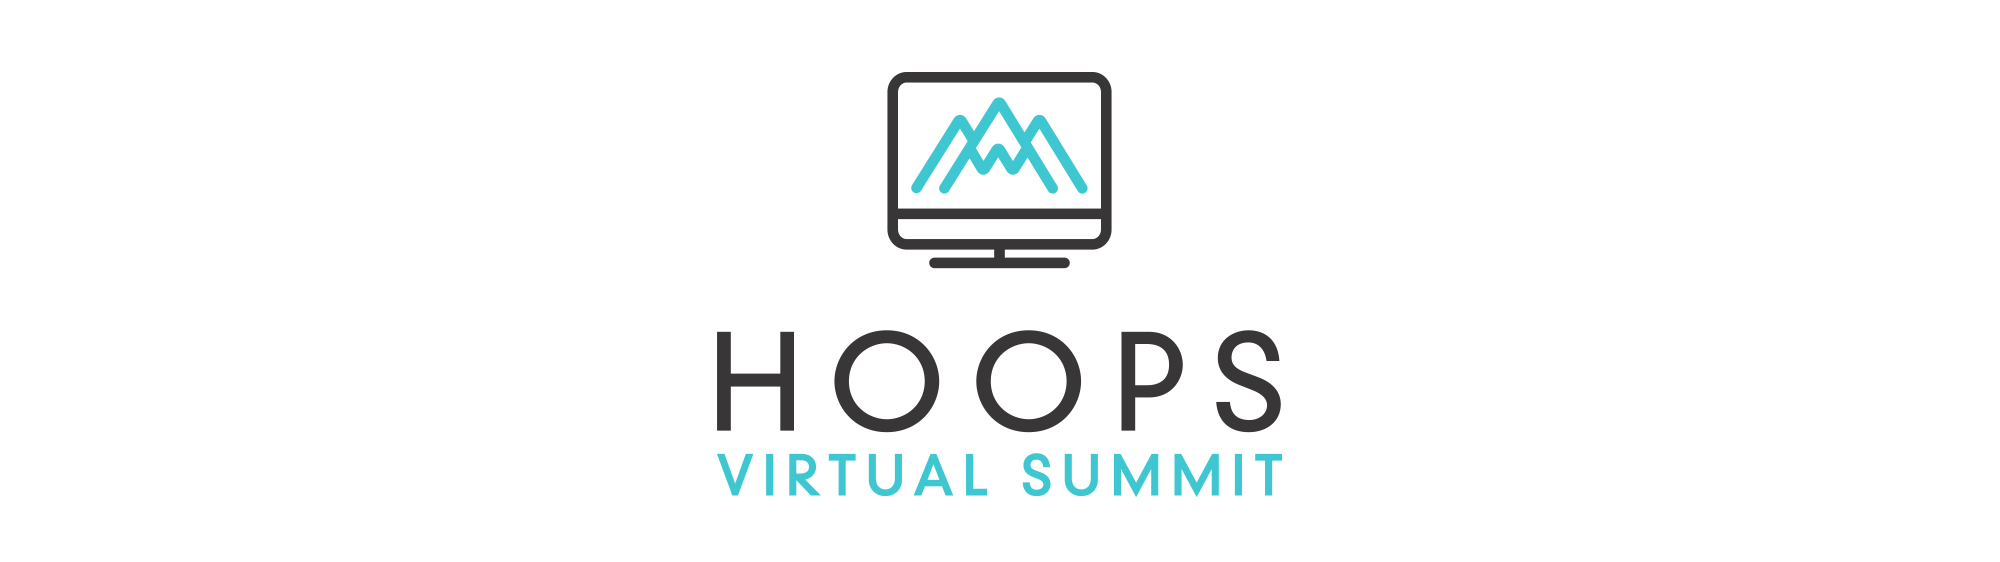 banner-virtual-summit